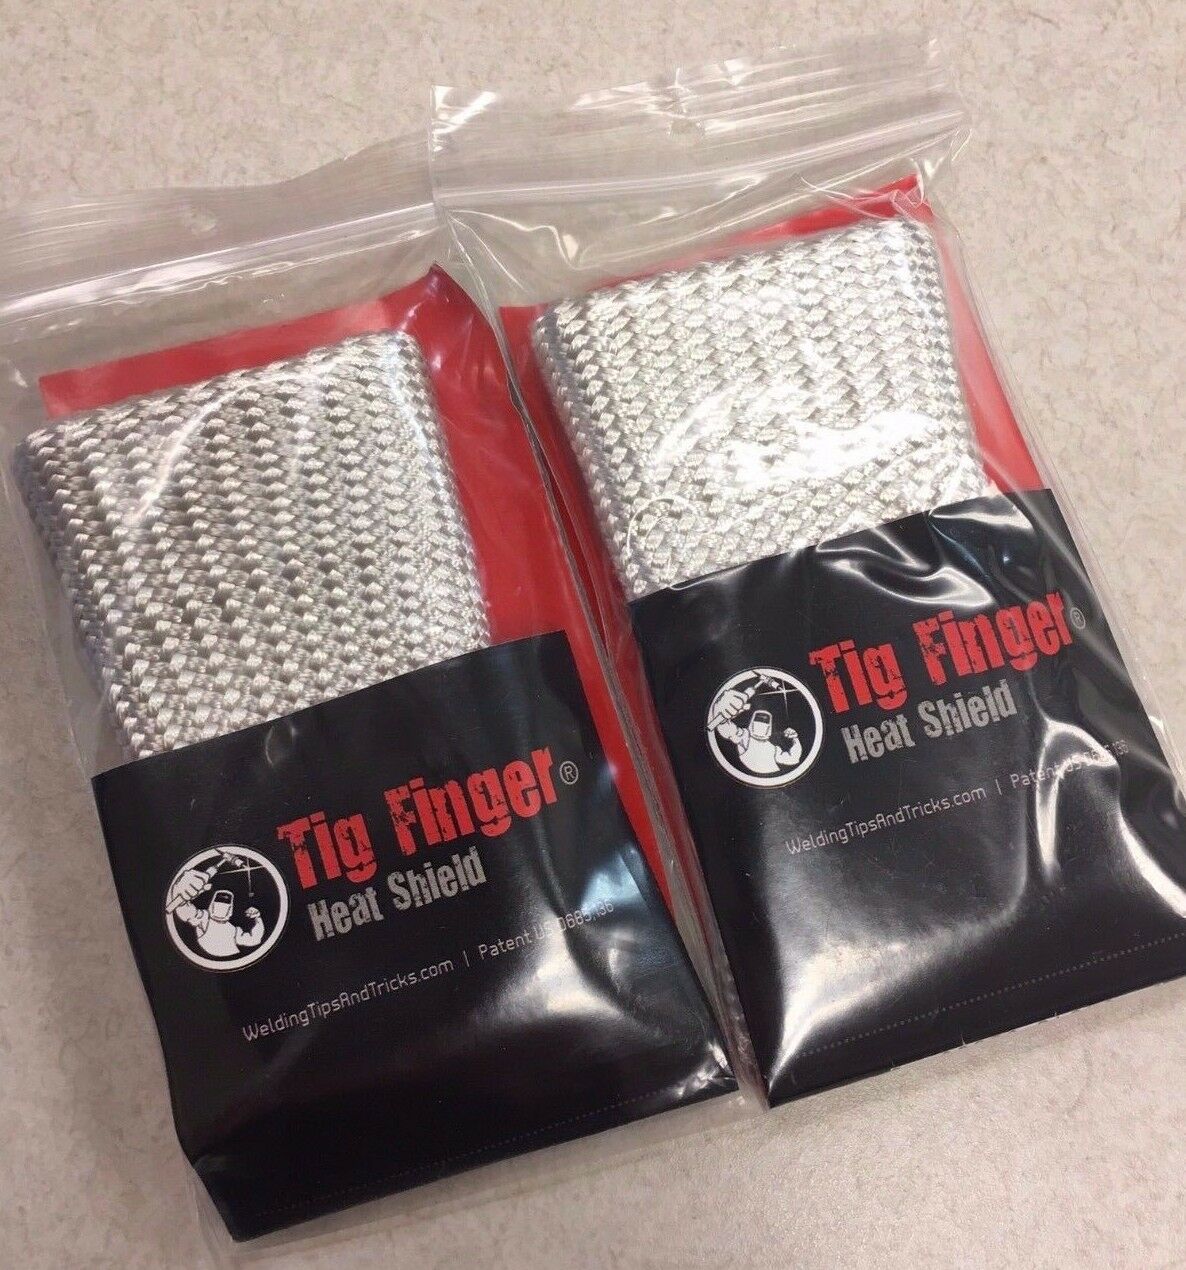 2 Pack! The Original Tig Finger Weld Monger Welding Glove Heat Shield Cover